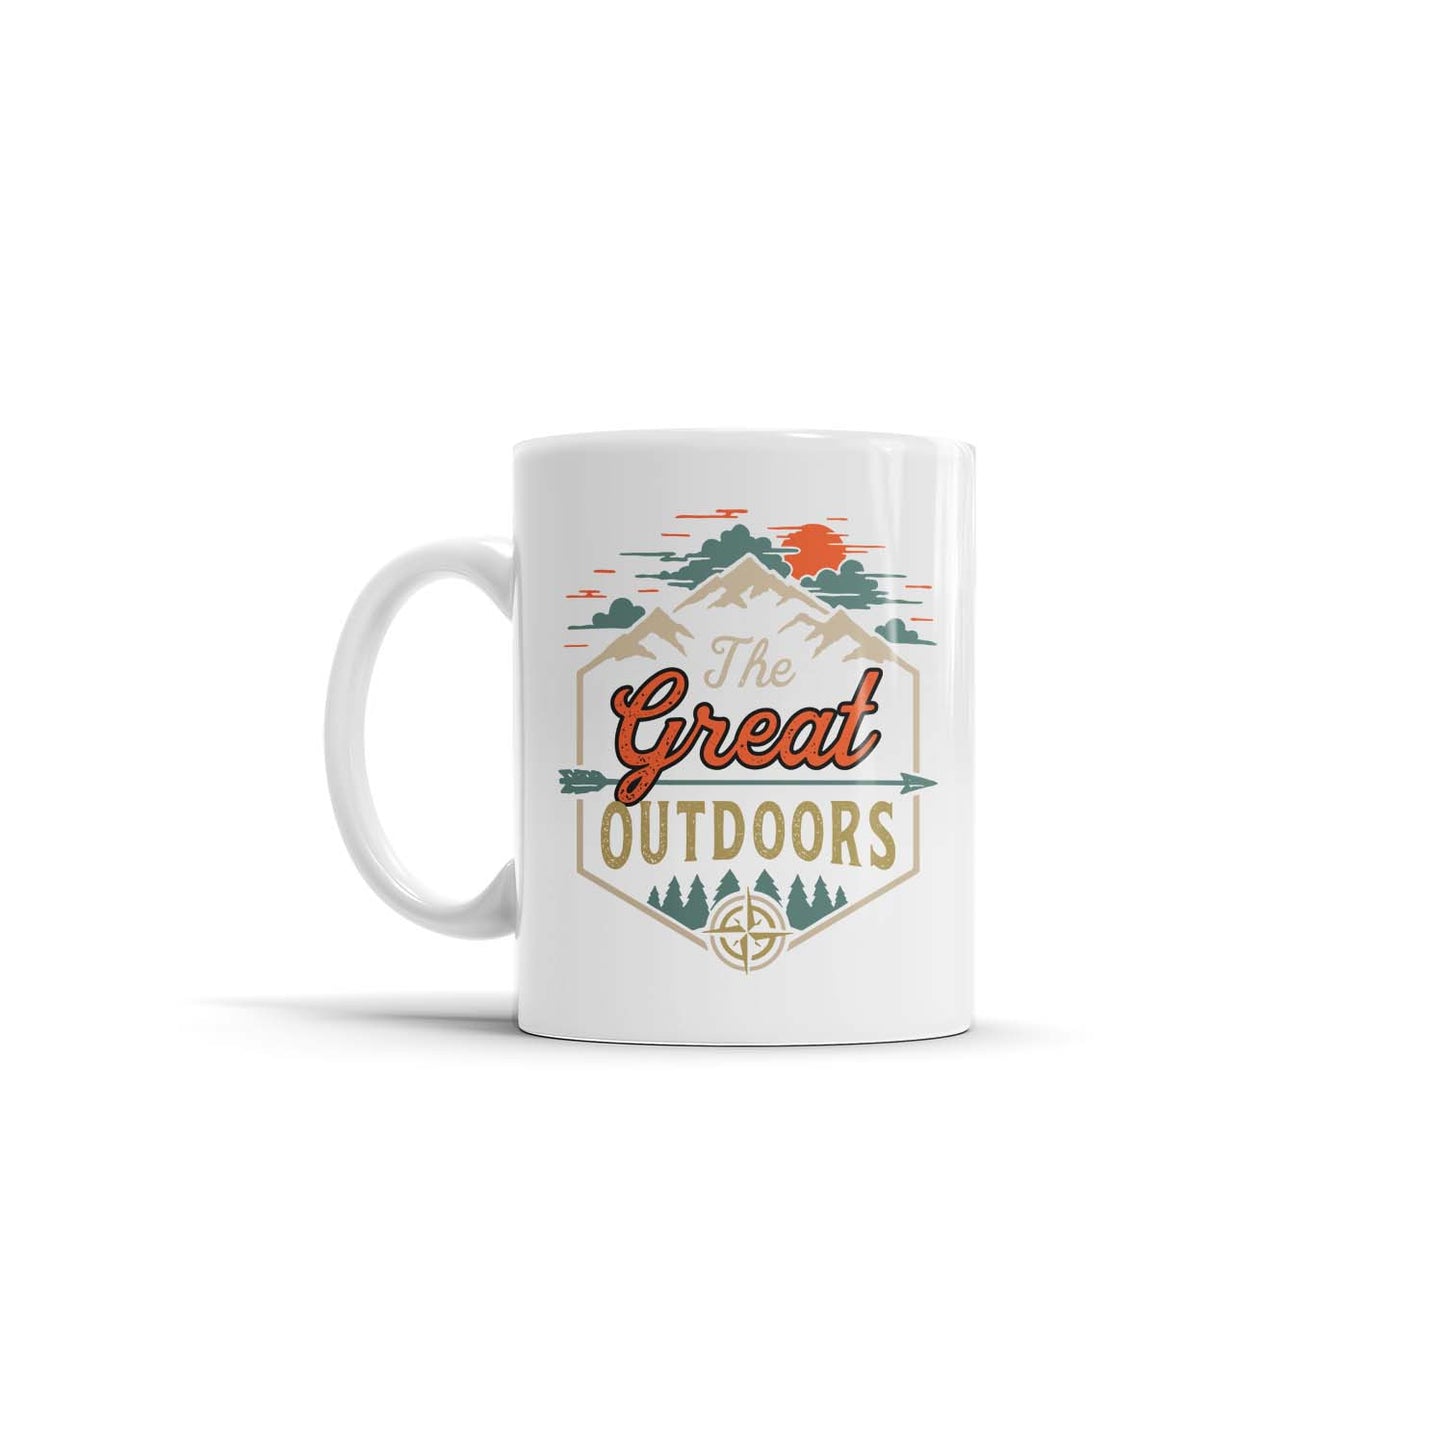 The Great Outdoors Mug